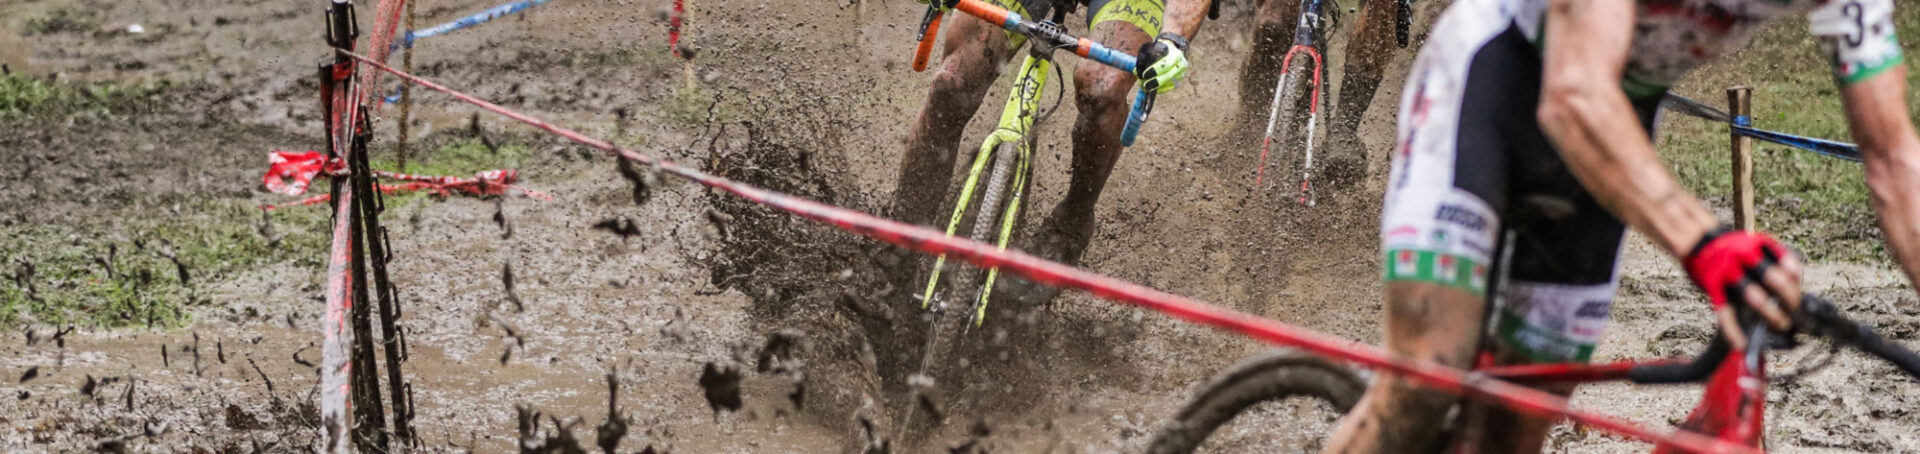 CX riders splashing through the mud